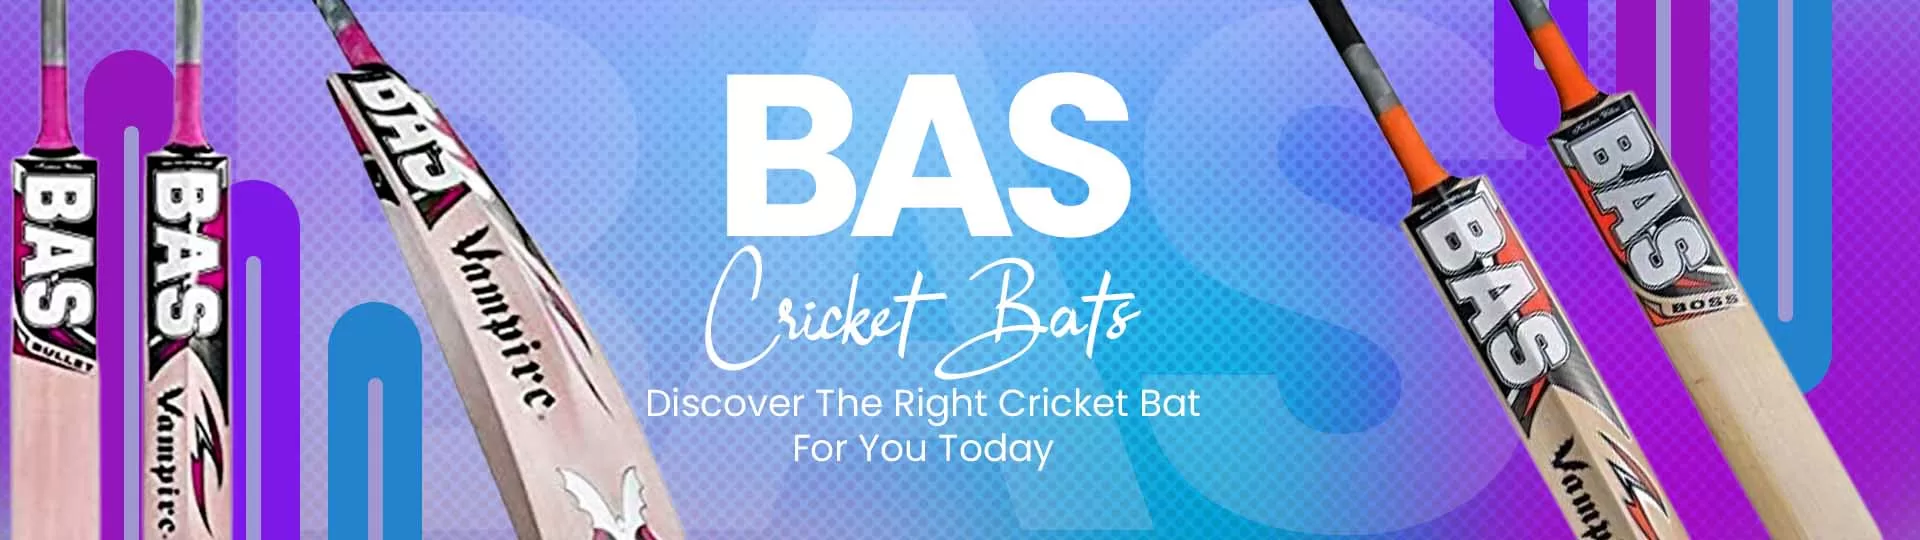 BAS Cricket Bats